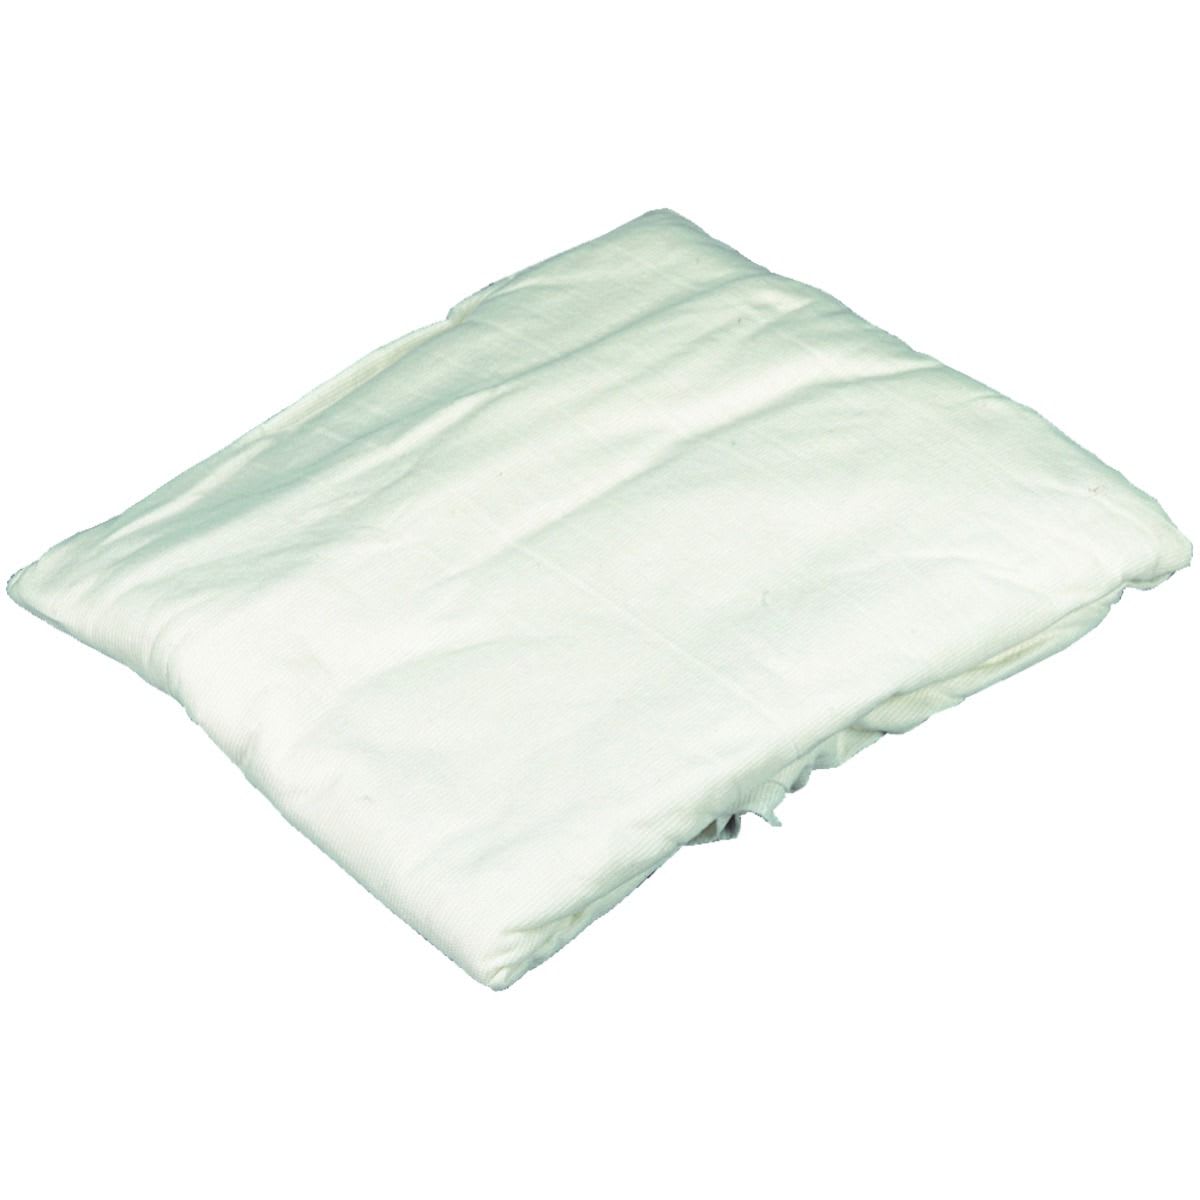 Professional Cotton Dust Sheet - 3.6 x 2.7m | Wickes.co.uk